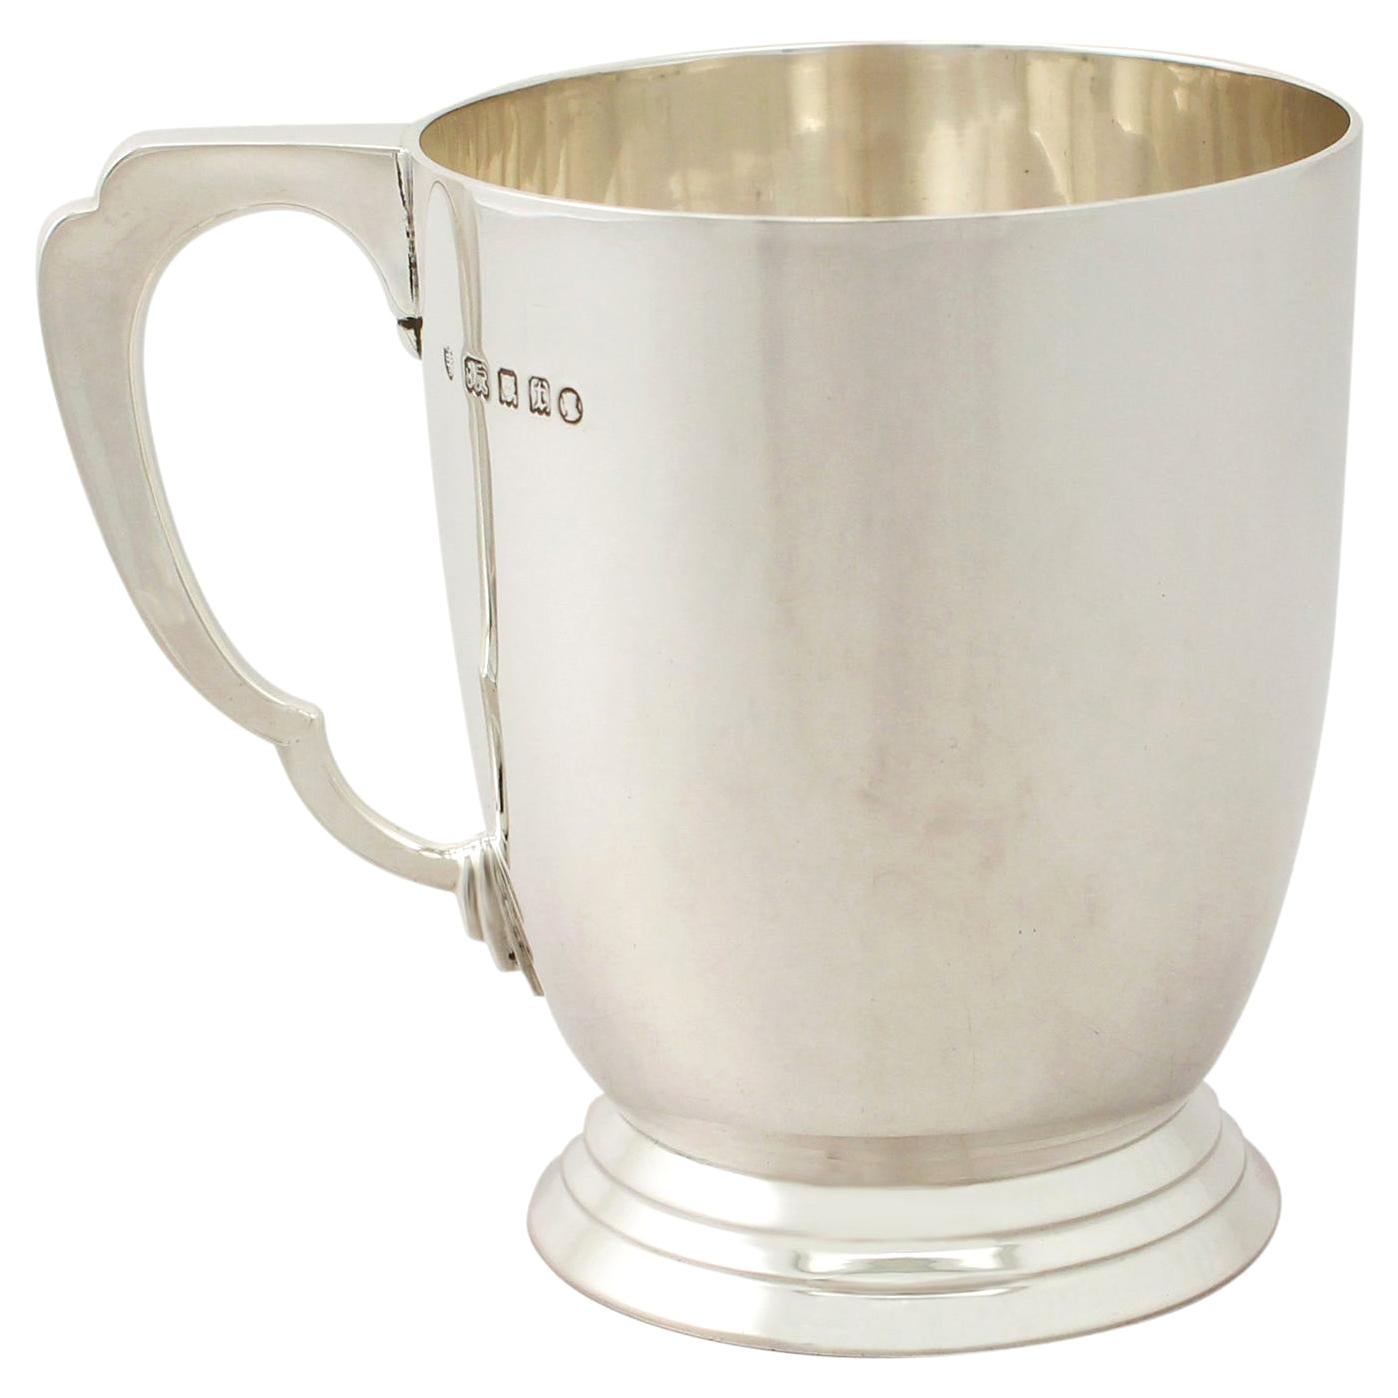 Antique Art Deco Sterling Silver Pint Mug by Edward Barnard & Sons Ltd